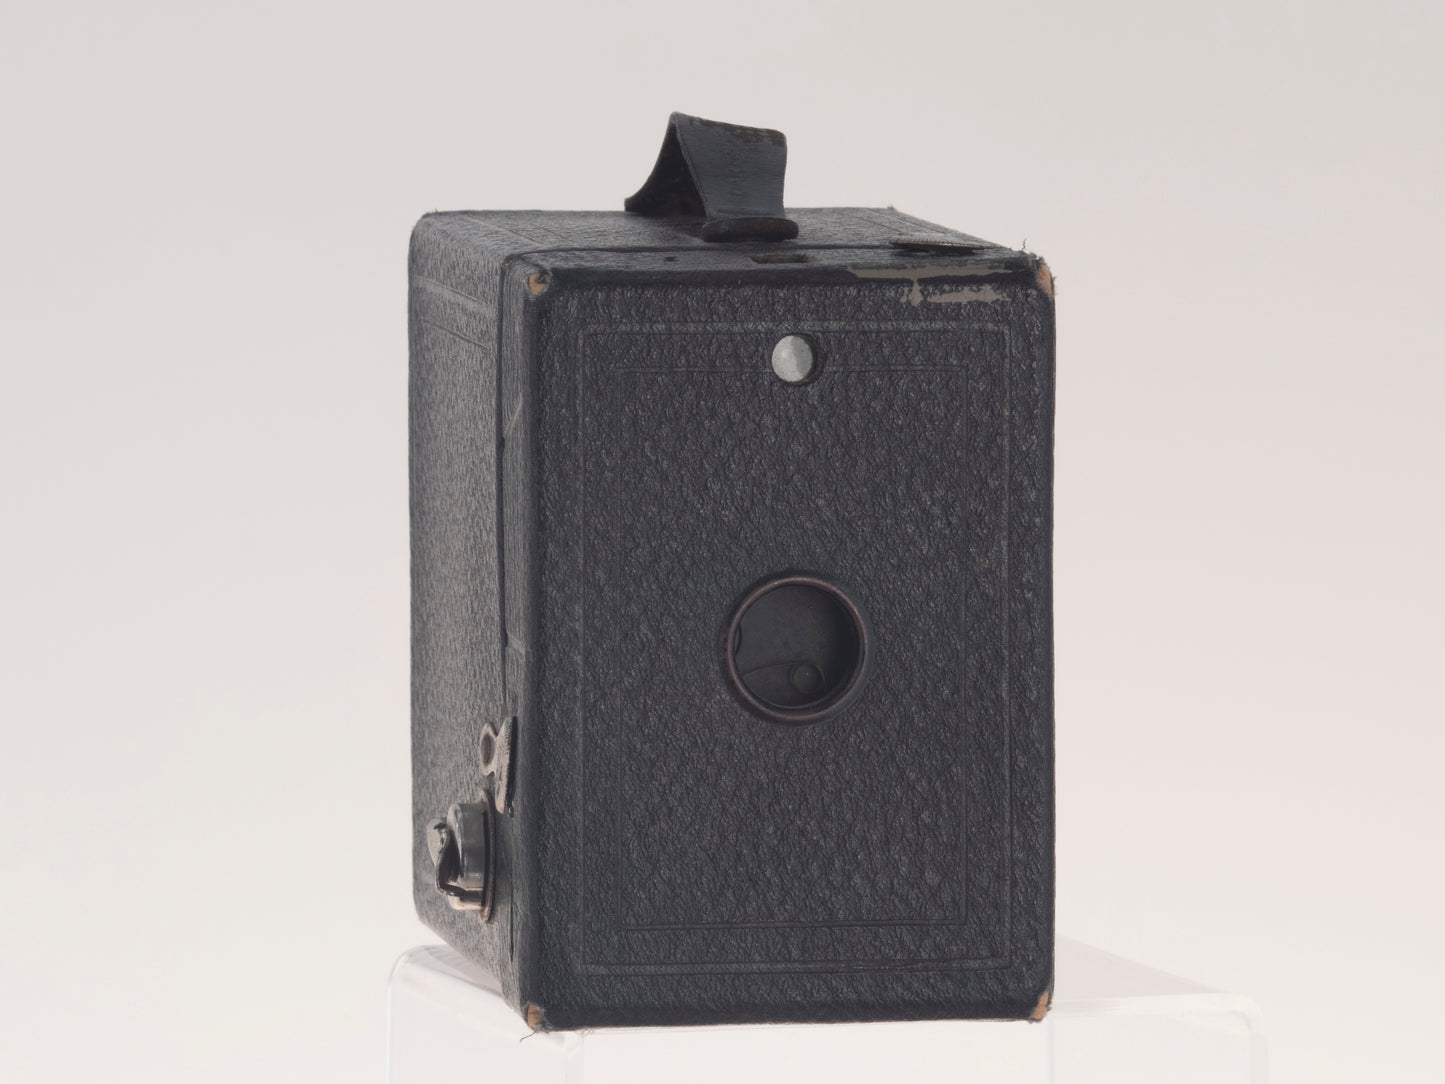 Kodak Brownie #2 Hawkeye 120 Model C camera (uses 120 film)